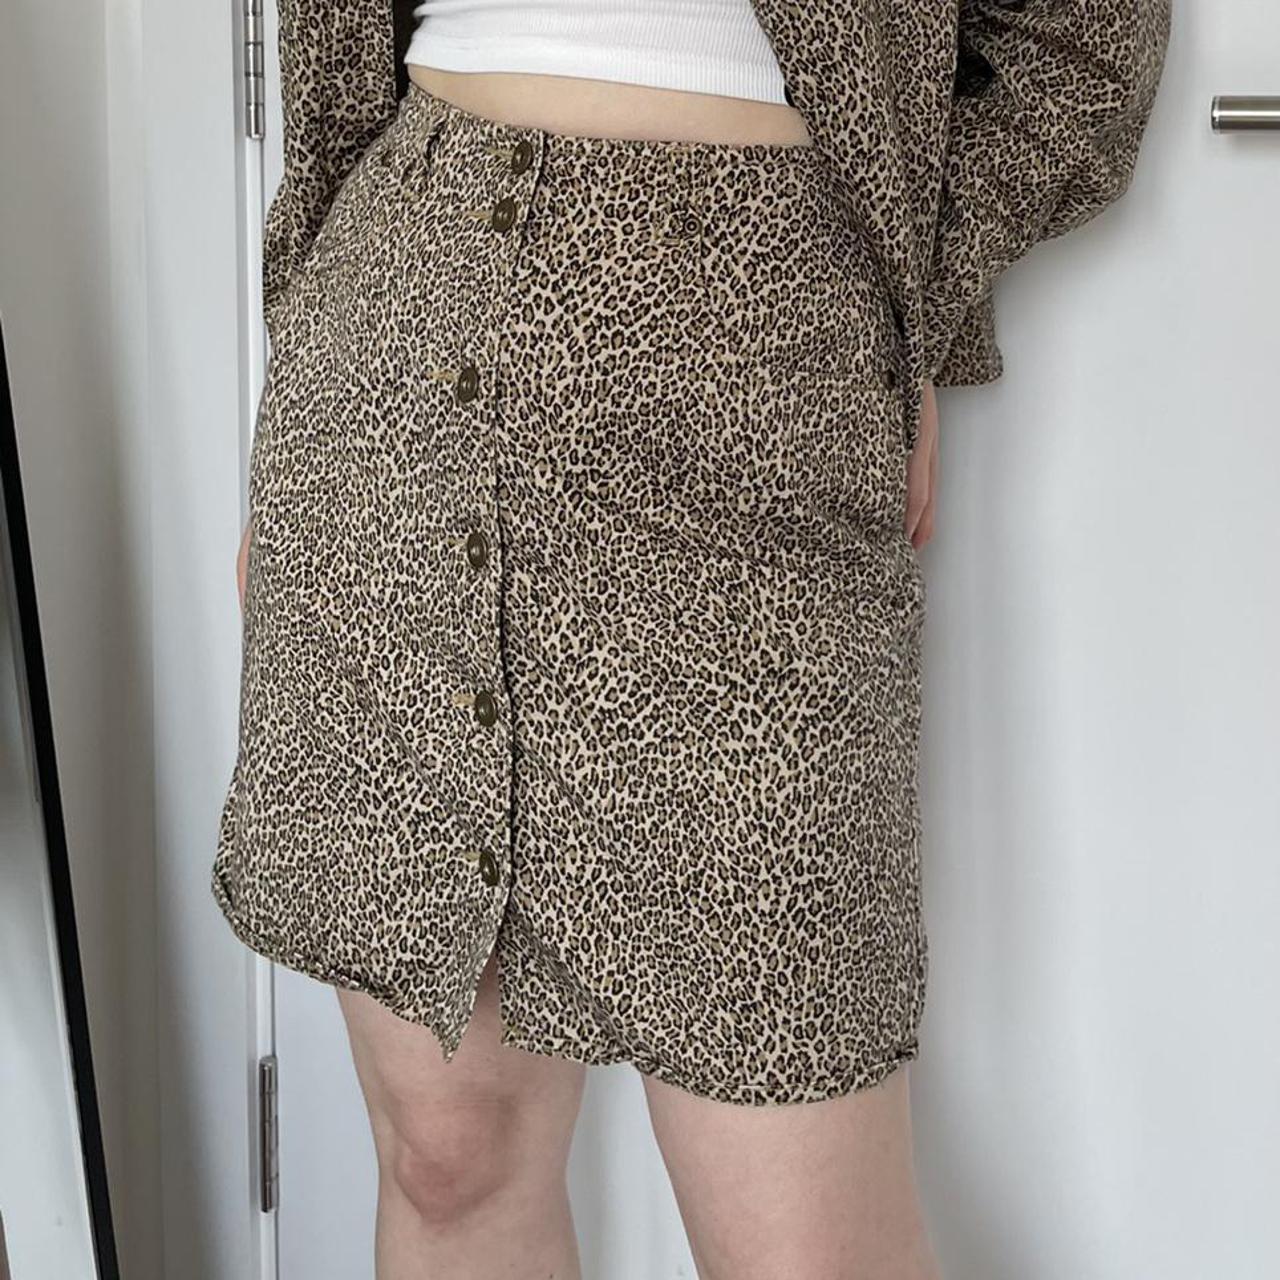 Liz Claiborne Women's Tan and Brown Skirt (3)